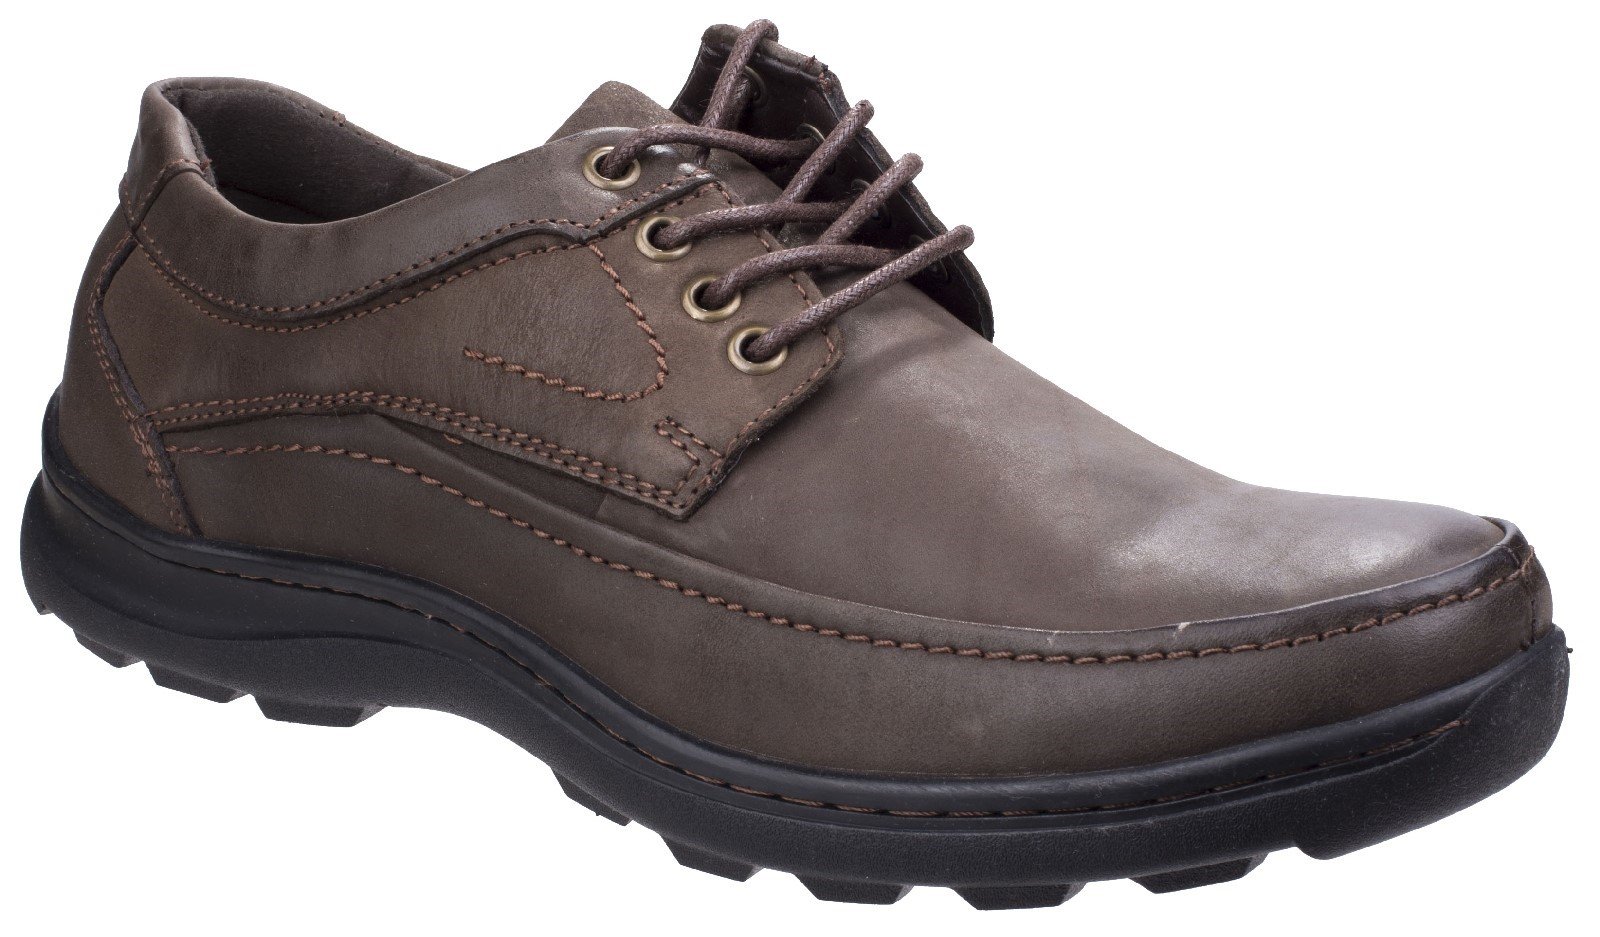 Fleet & Foster Men's Luxor Lace Up Shoe Black 26313-43921 - Brown 7